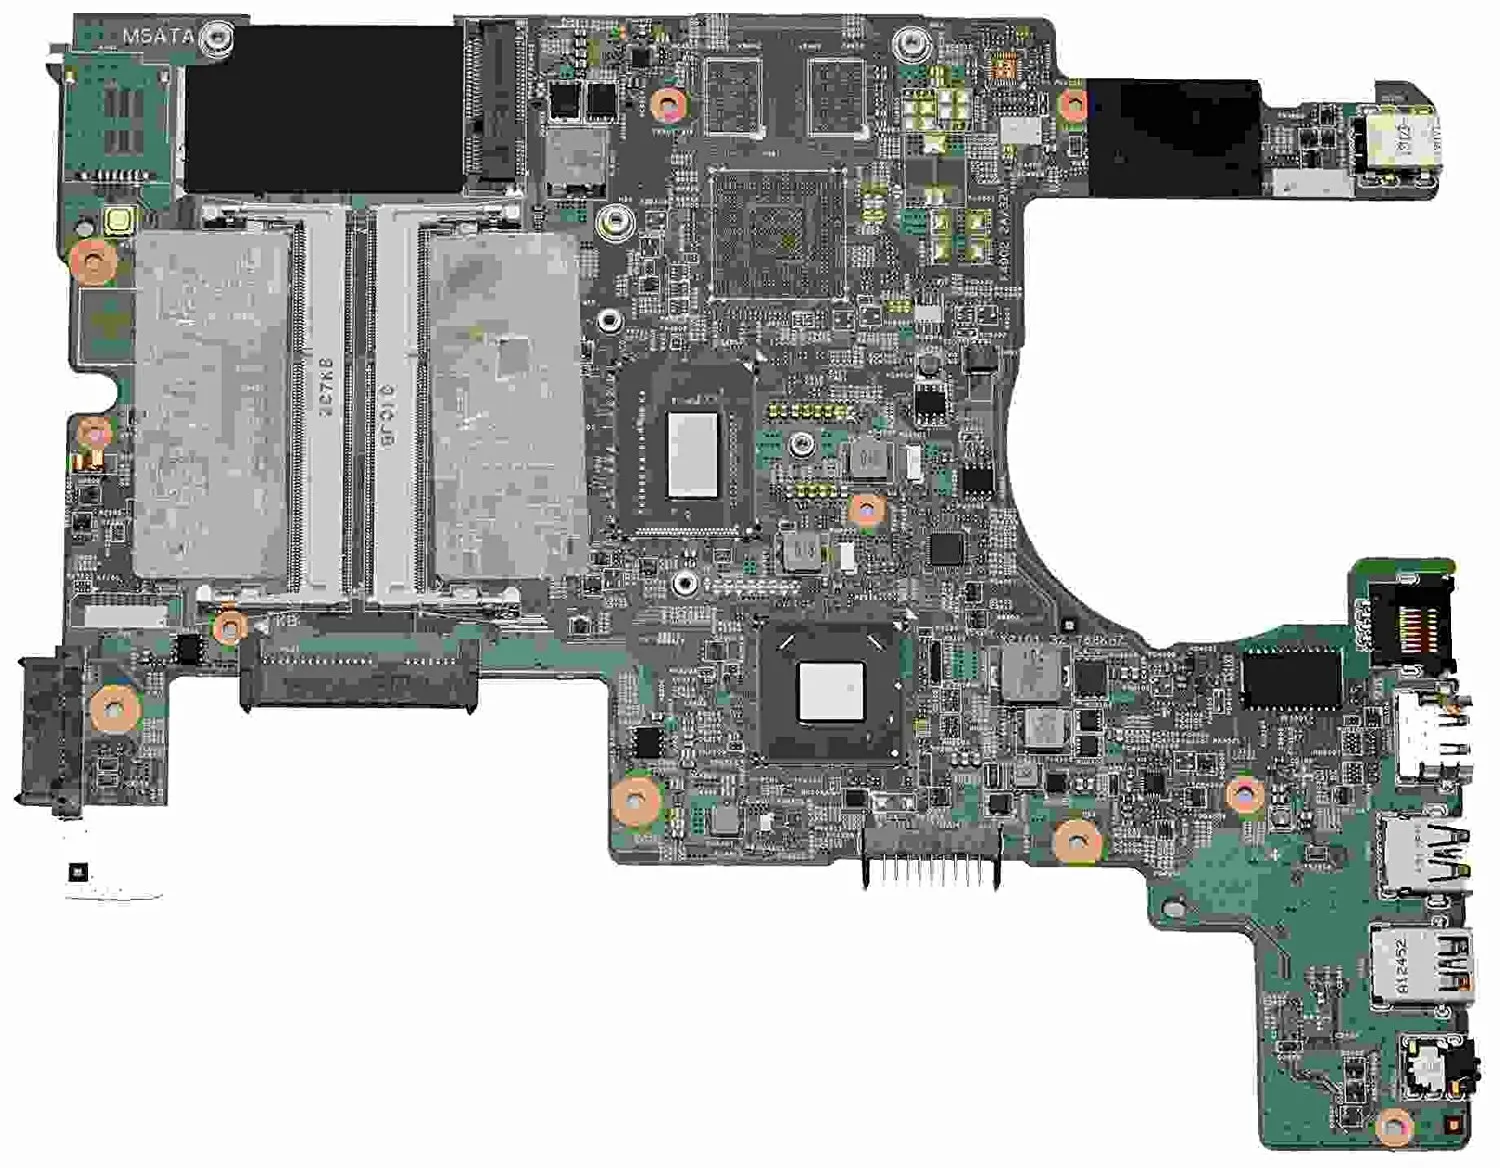 Buy XGFGH Dell Inspiron 15z 5523 Laptop Motherboard w/ Intel i3-3227U 1